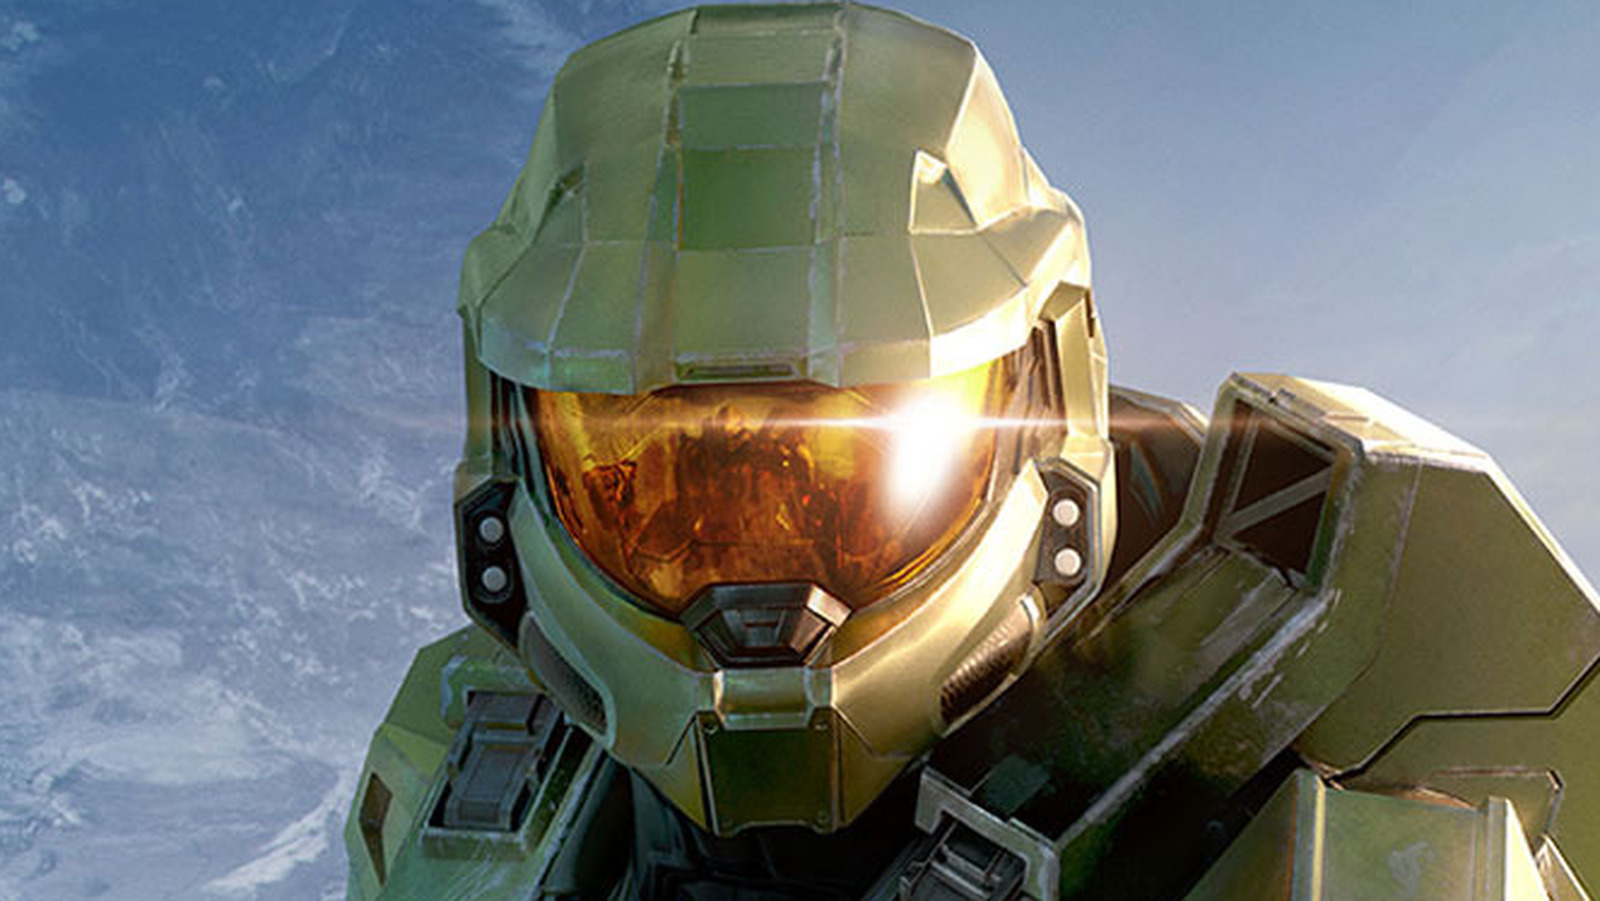 Halo Infinite' sets Forge release date but scraps split-screen co-op